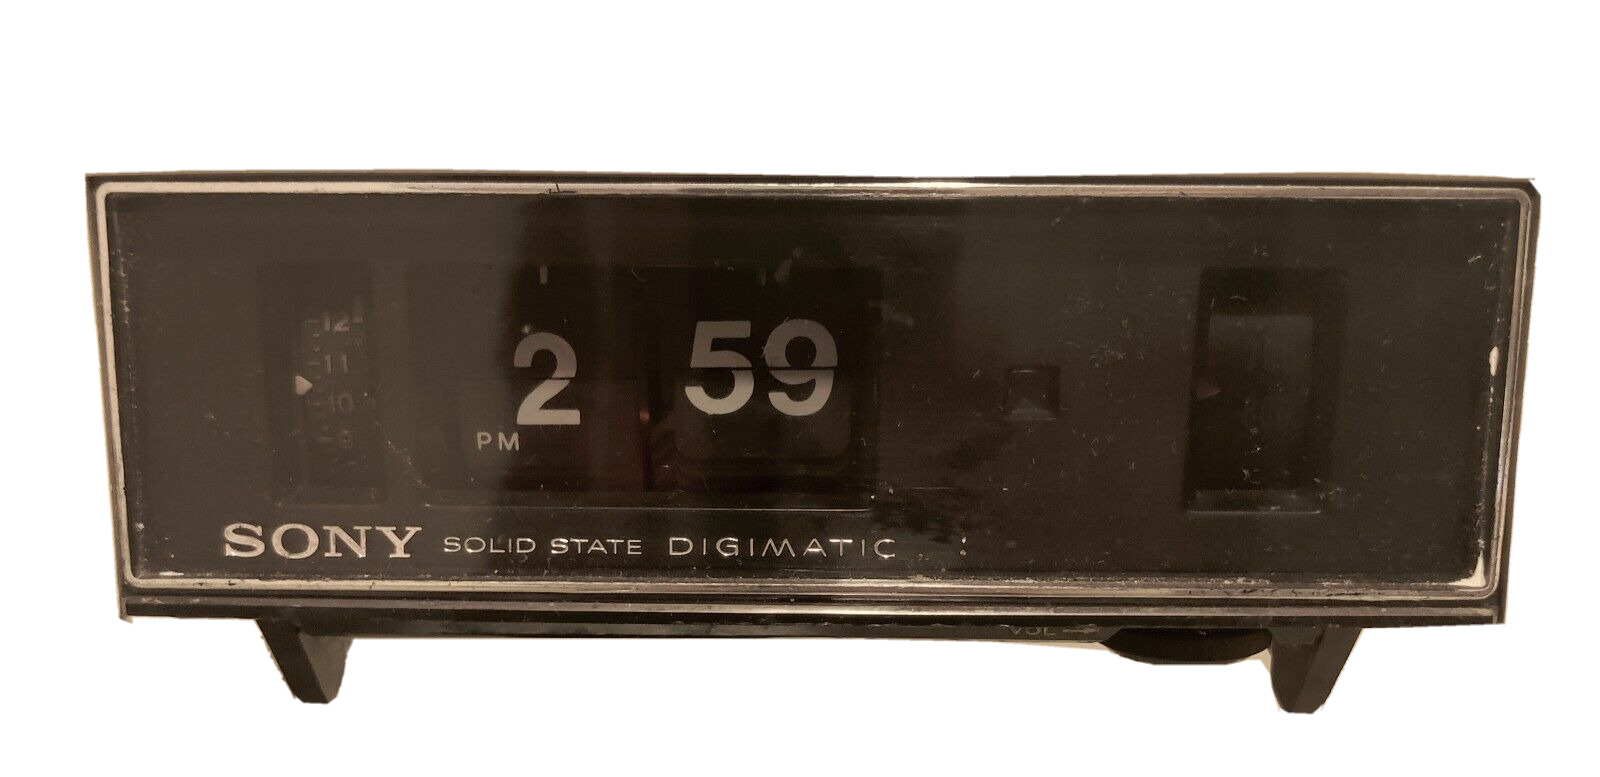 1980 SONY SOLID STATE DIGIMATIC 8RC 6 TRANSISTORS FLIP CLOCK-RADIO. 220 V 50 HZ